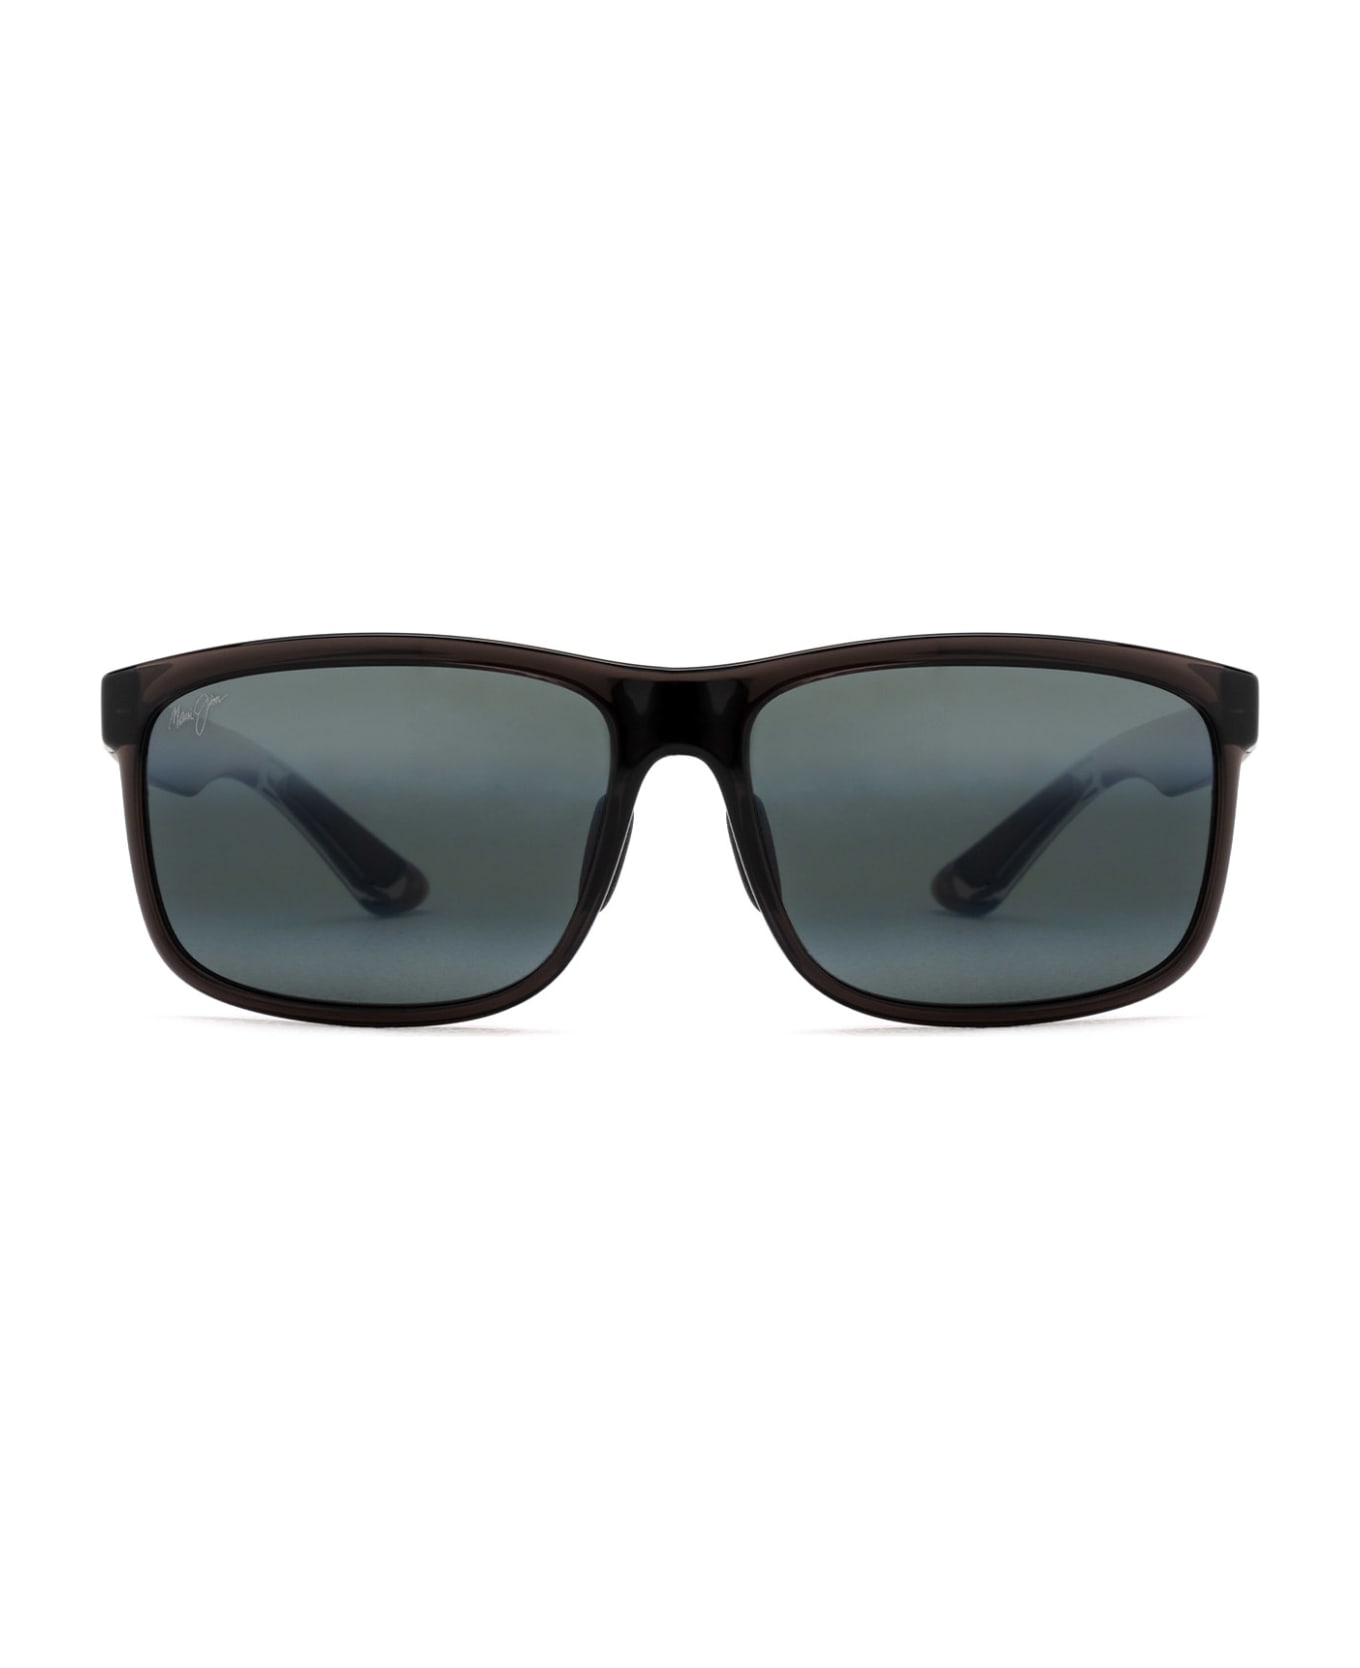 Maui Jim Mj449 Translucent Grey Sunglasses - Translucent Grey サングラス